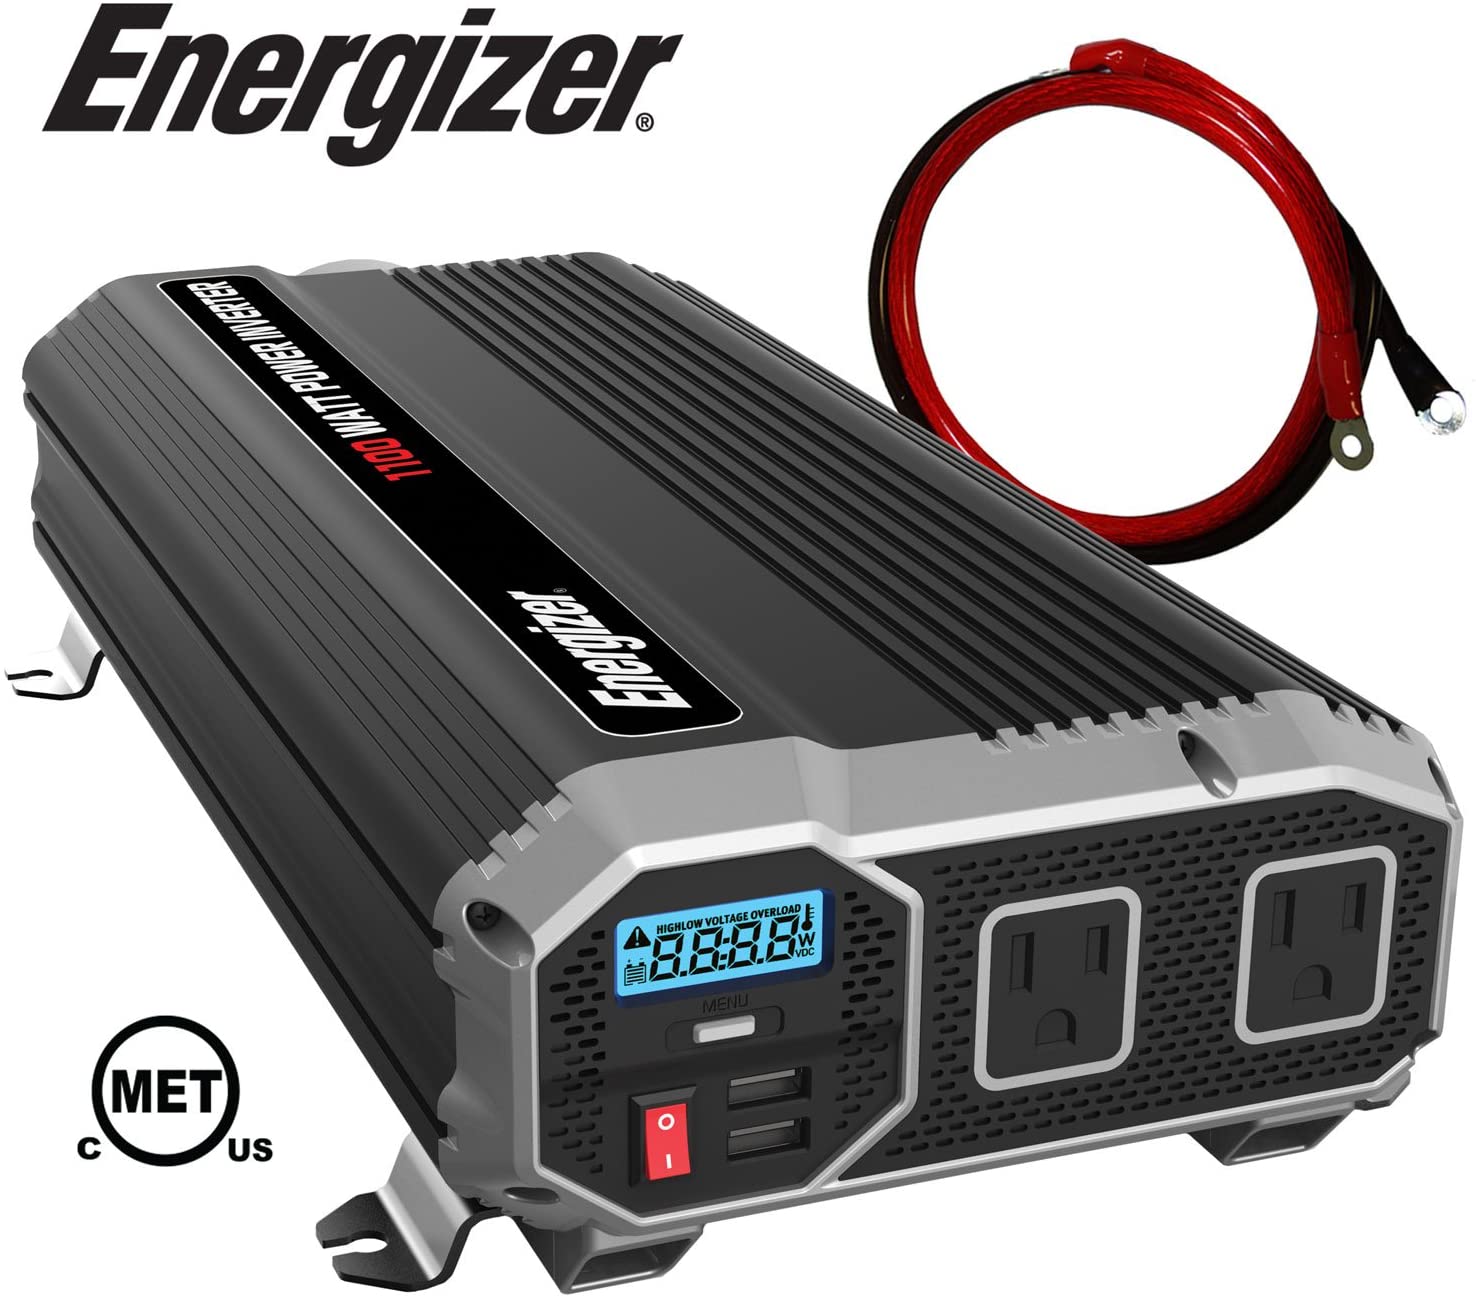 Energizer 1100-Watt Power Inverter